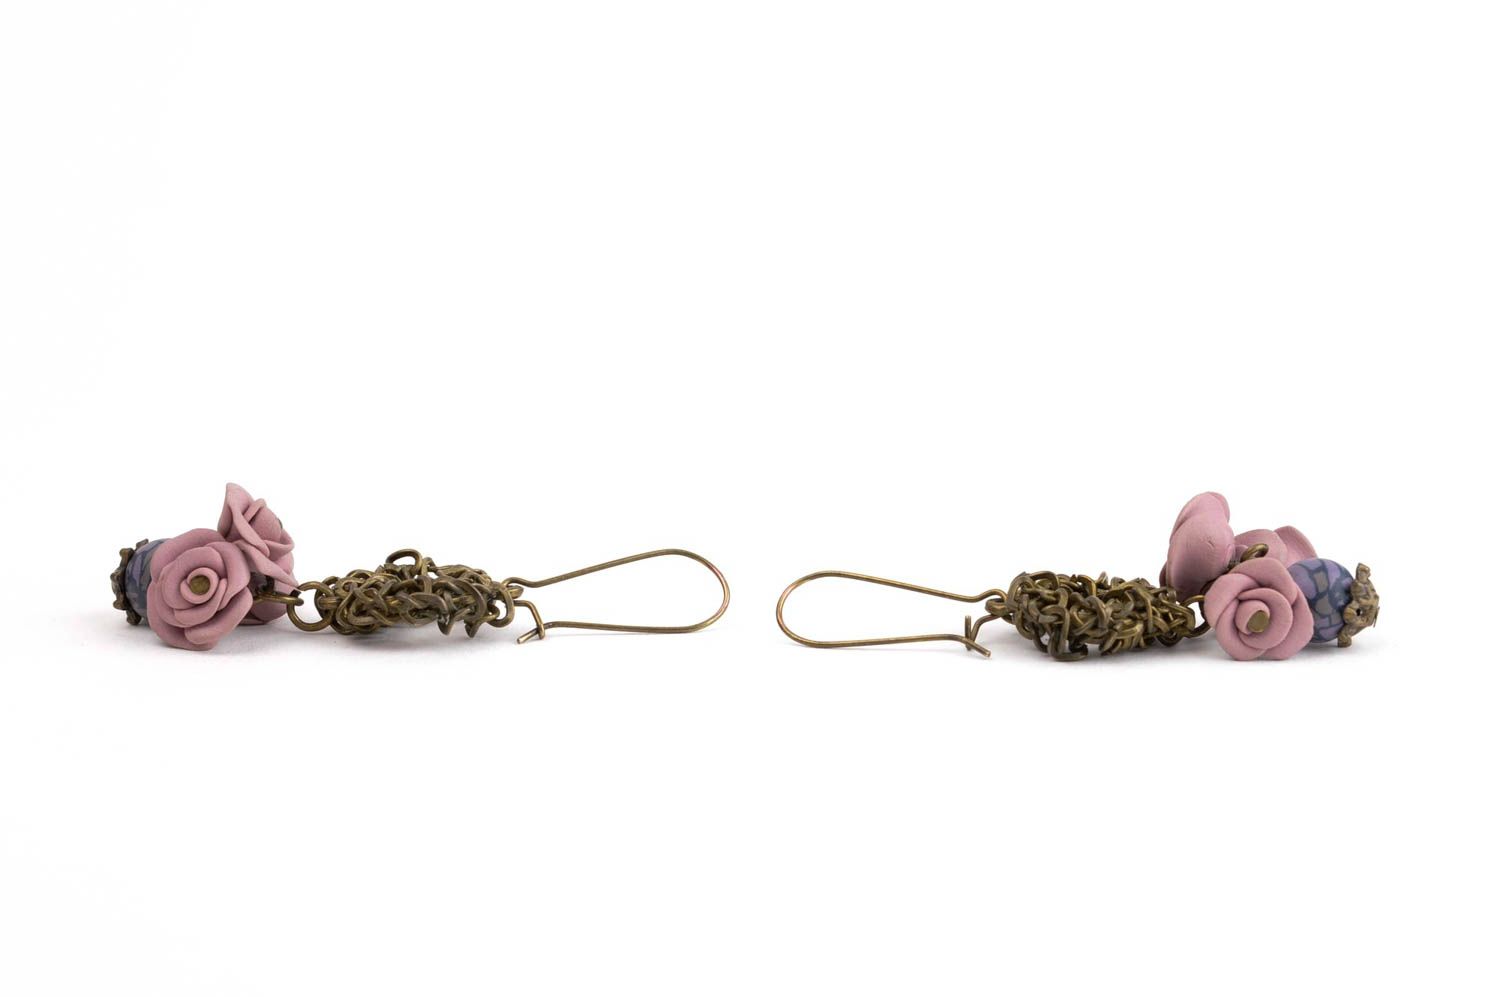 Handmade earrings designer accessory gift ideas clay earrings unusual jewelry photo 3